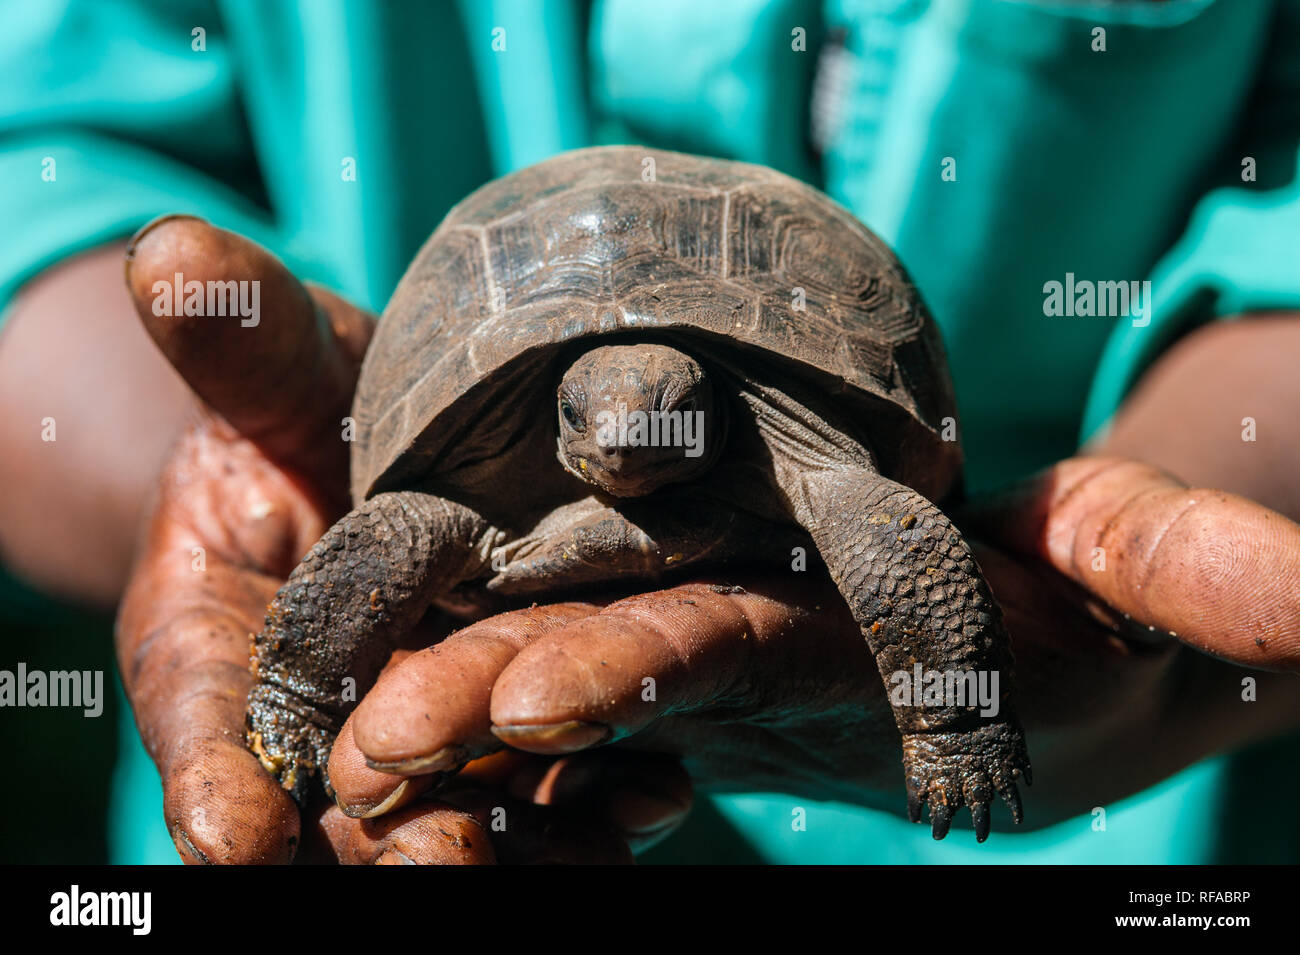 Bambino tartaruga Aldabra (Aldabrachelys gigantea) presso il locale vivaio tartaruga, fregate isola privata, Seychelles, Oceano indiano, Africa Foto Stock